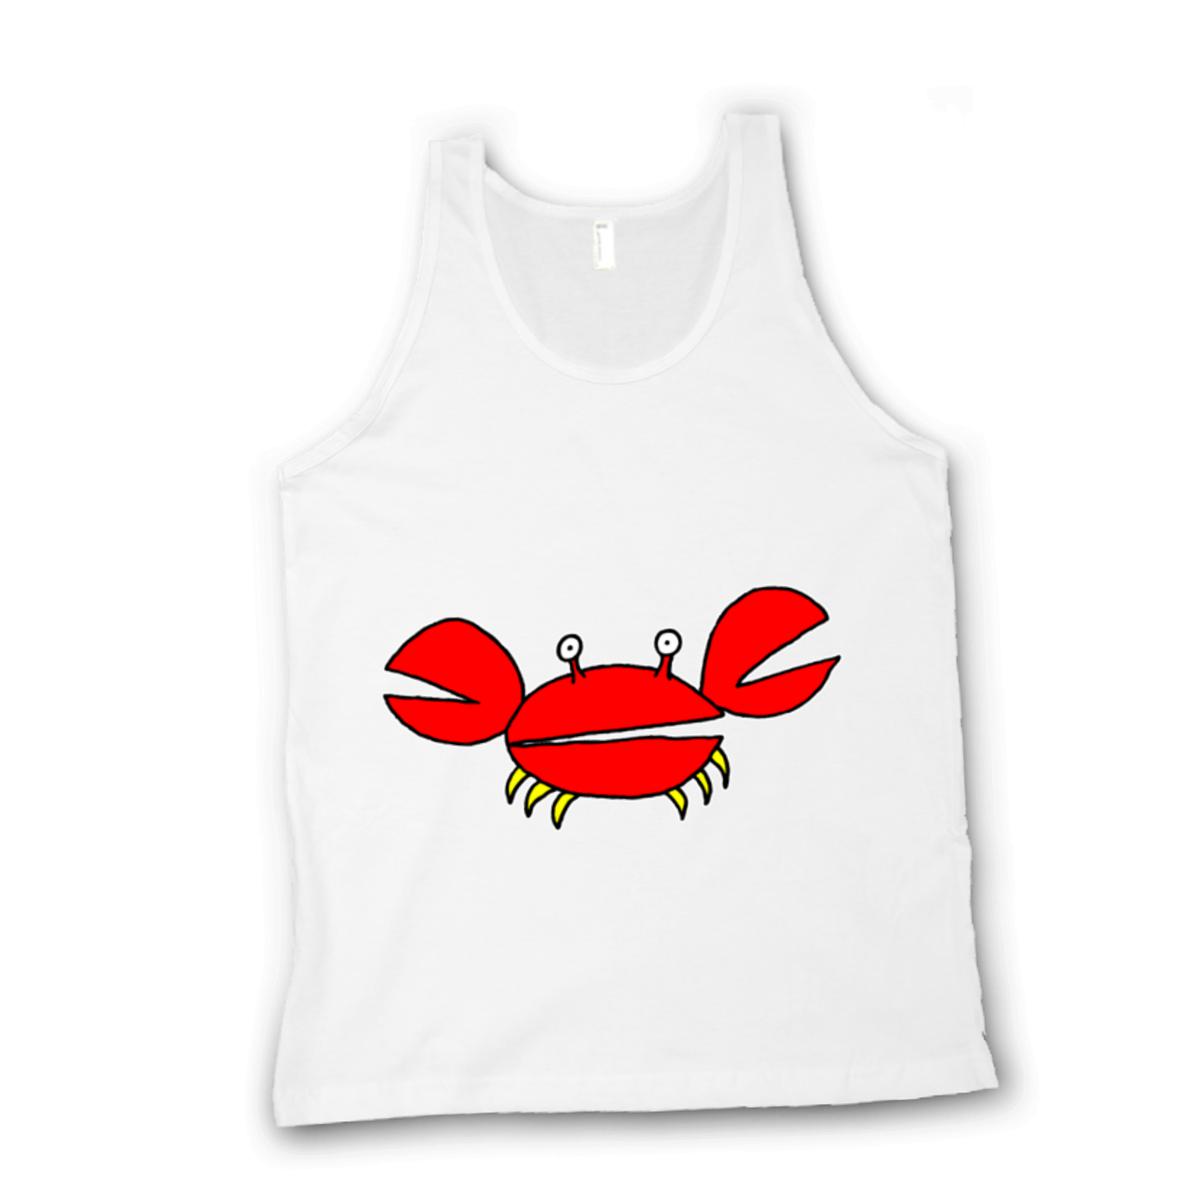 Crab Unisex Tank Top Small white